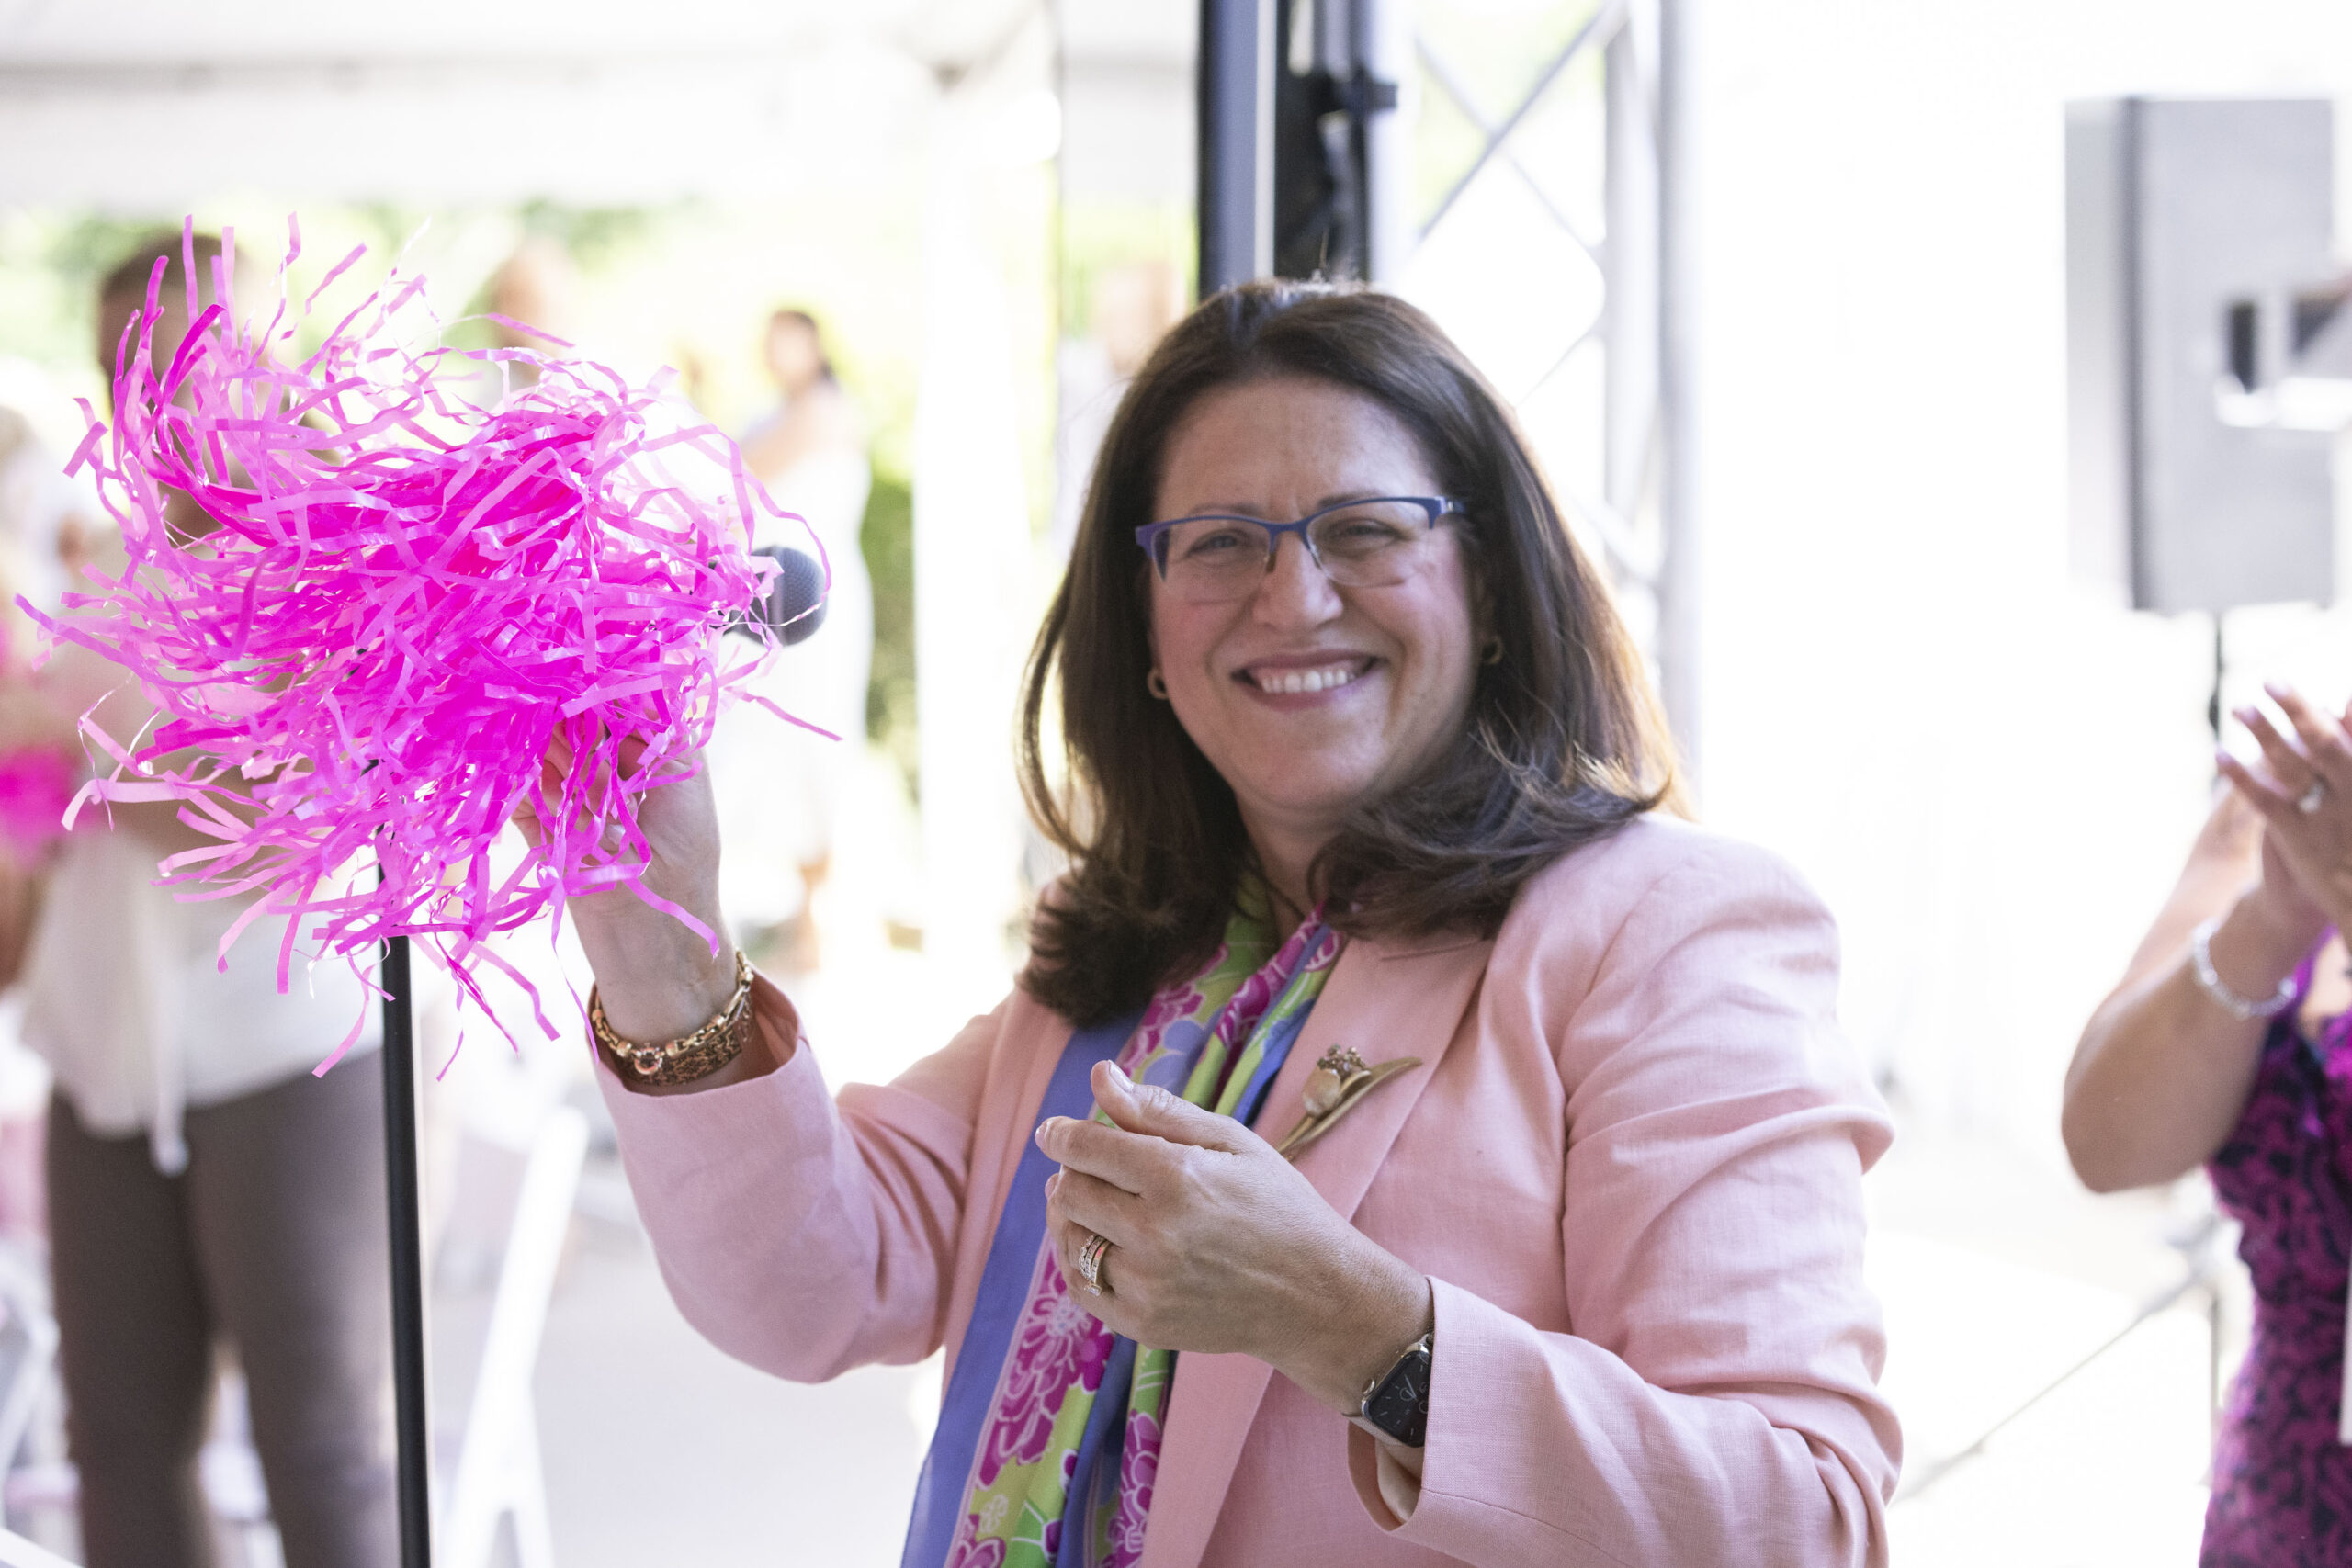 Dr. Generosa Grana holding a pink pom-pom Pink Roses Teal Magnolias event.